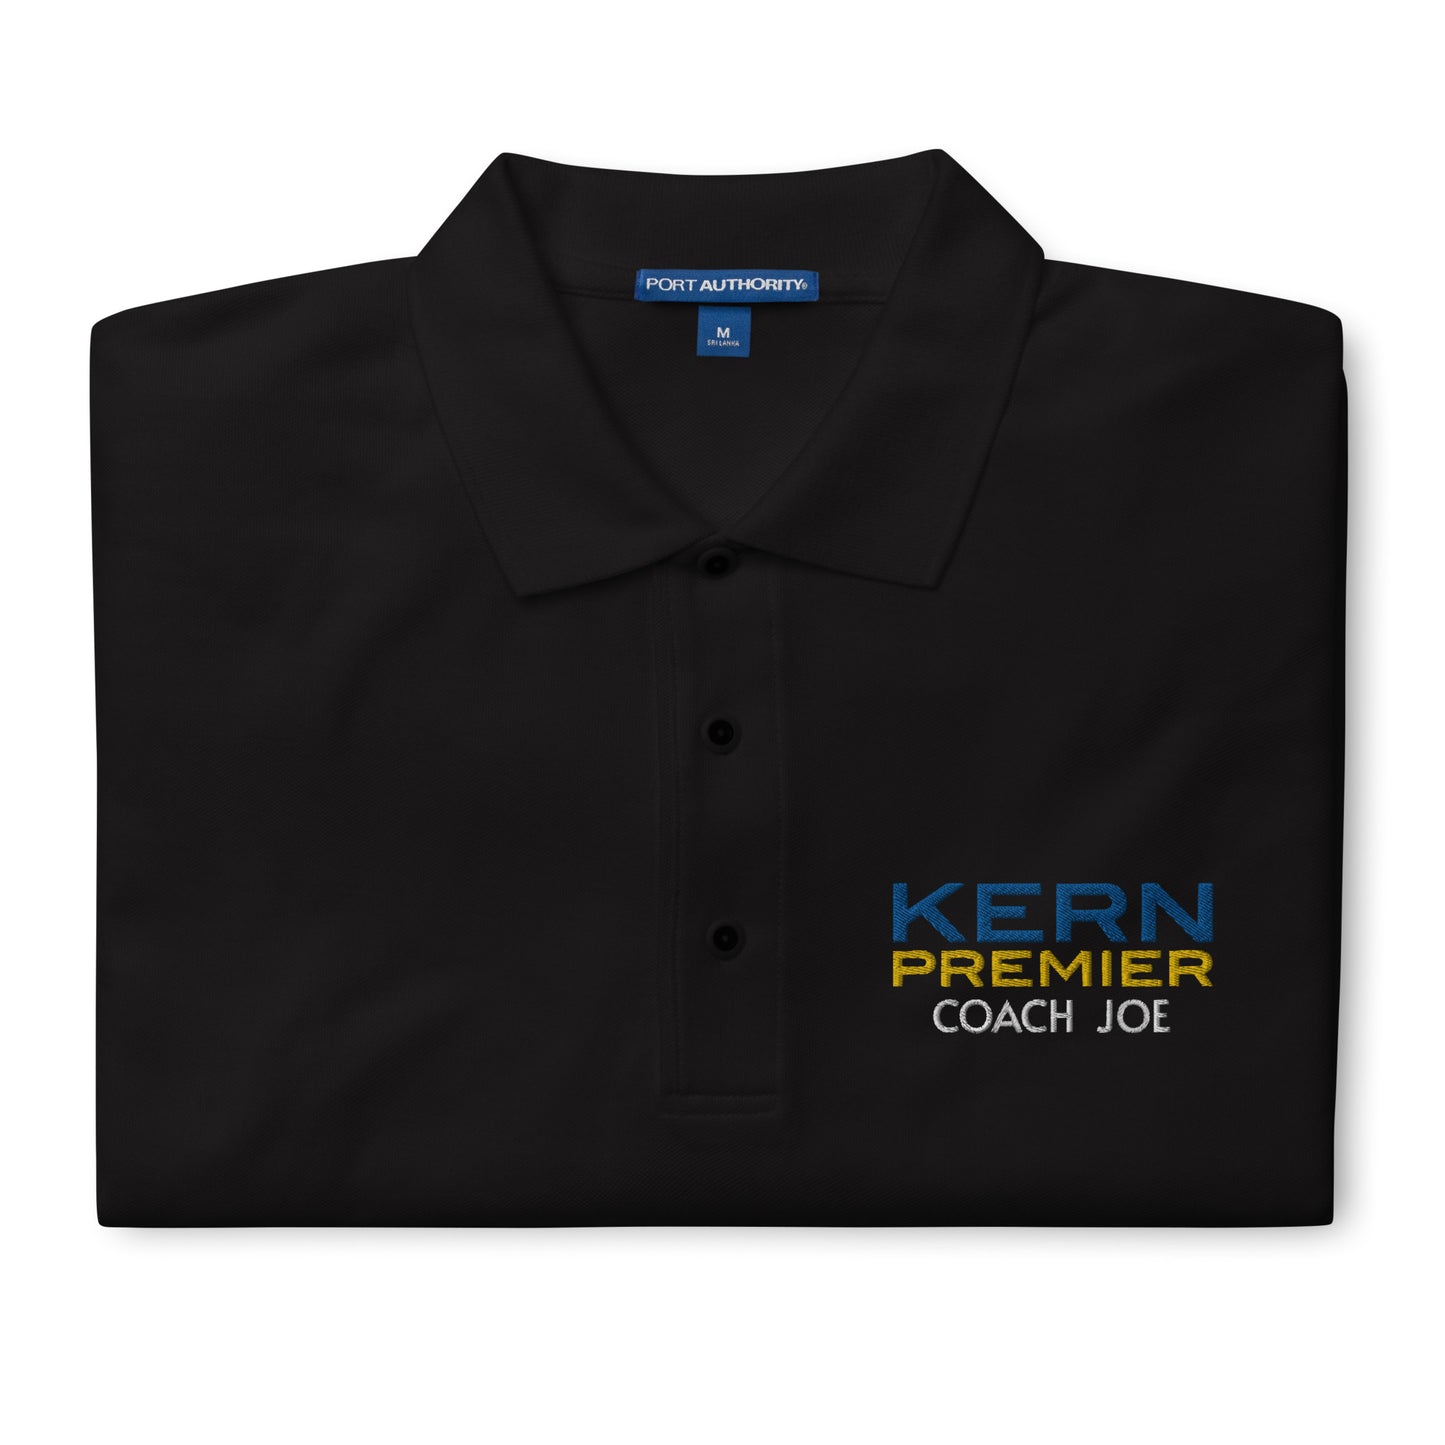 KP Logo - Coach Joe - Premium Polo